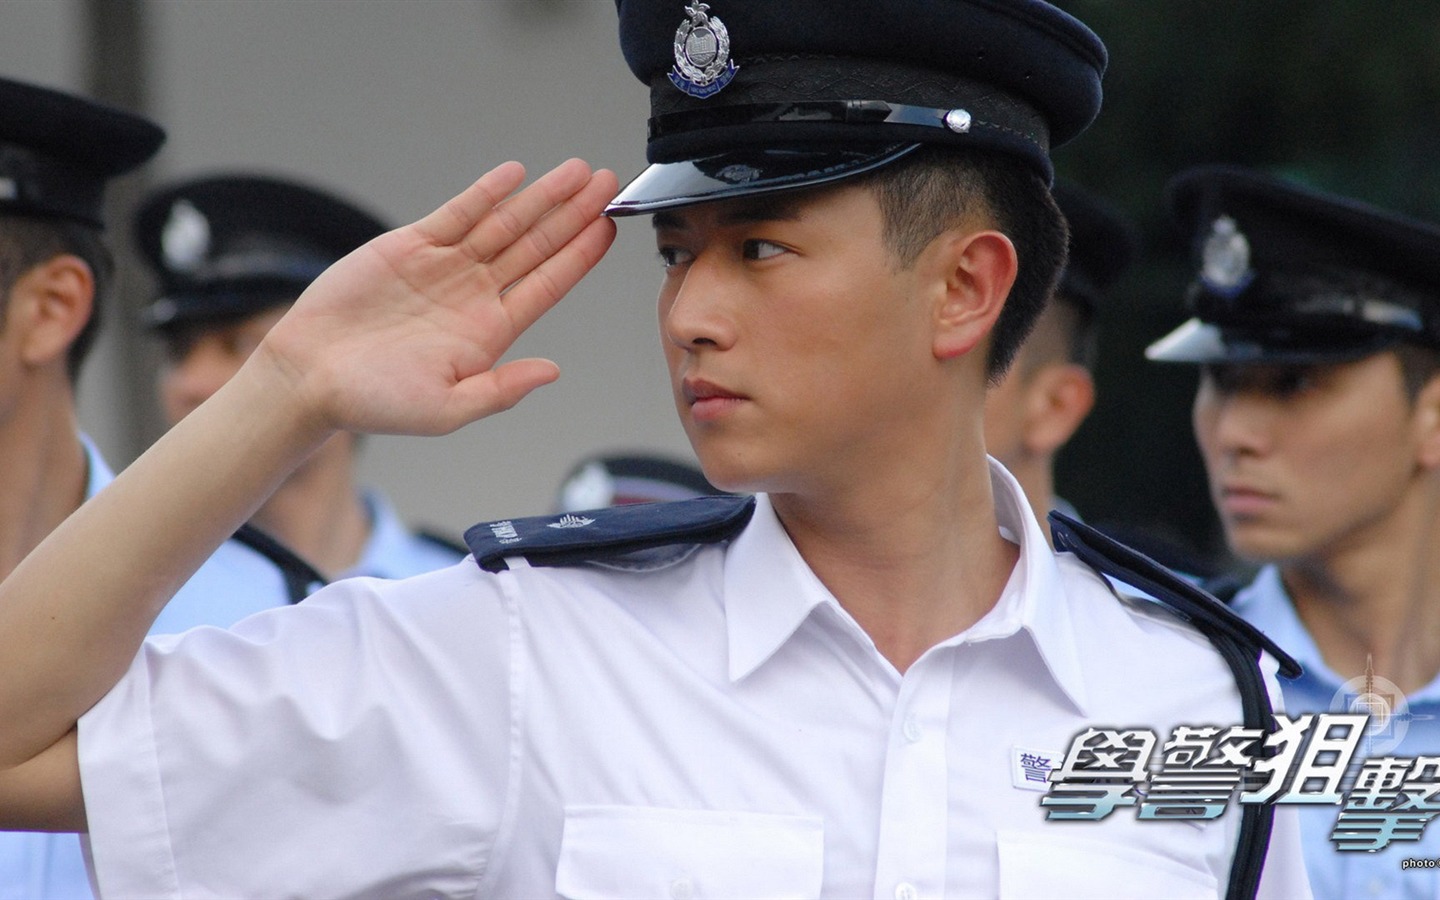 Populaires TVB Drama School Police Sniper #11 - 1440x900